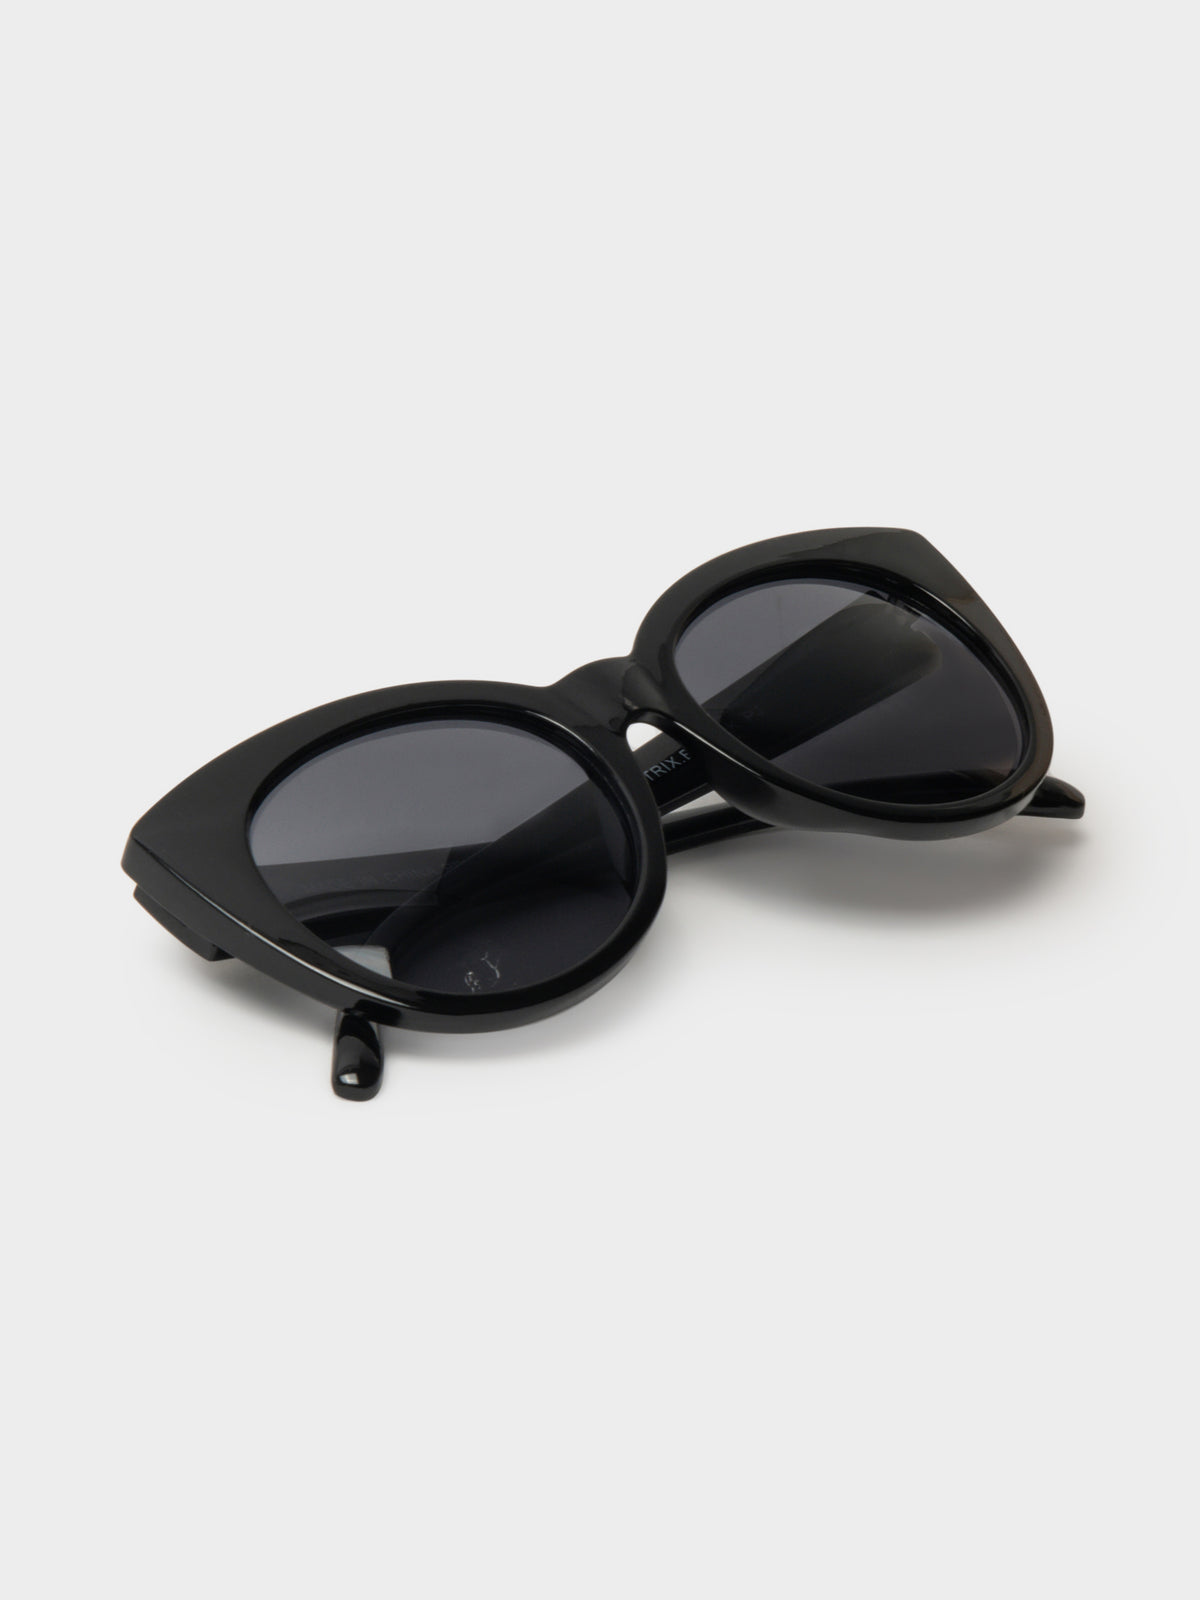 Beatrix Round Cat-Eye Sunglasses in Black